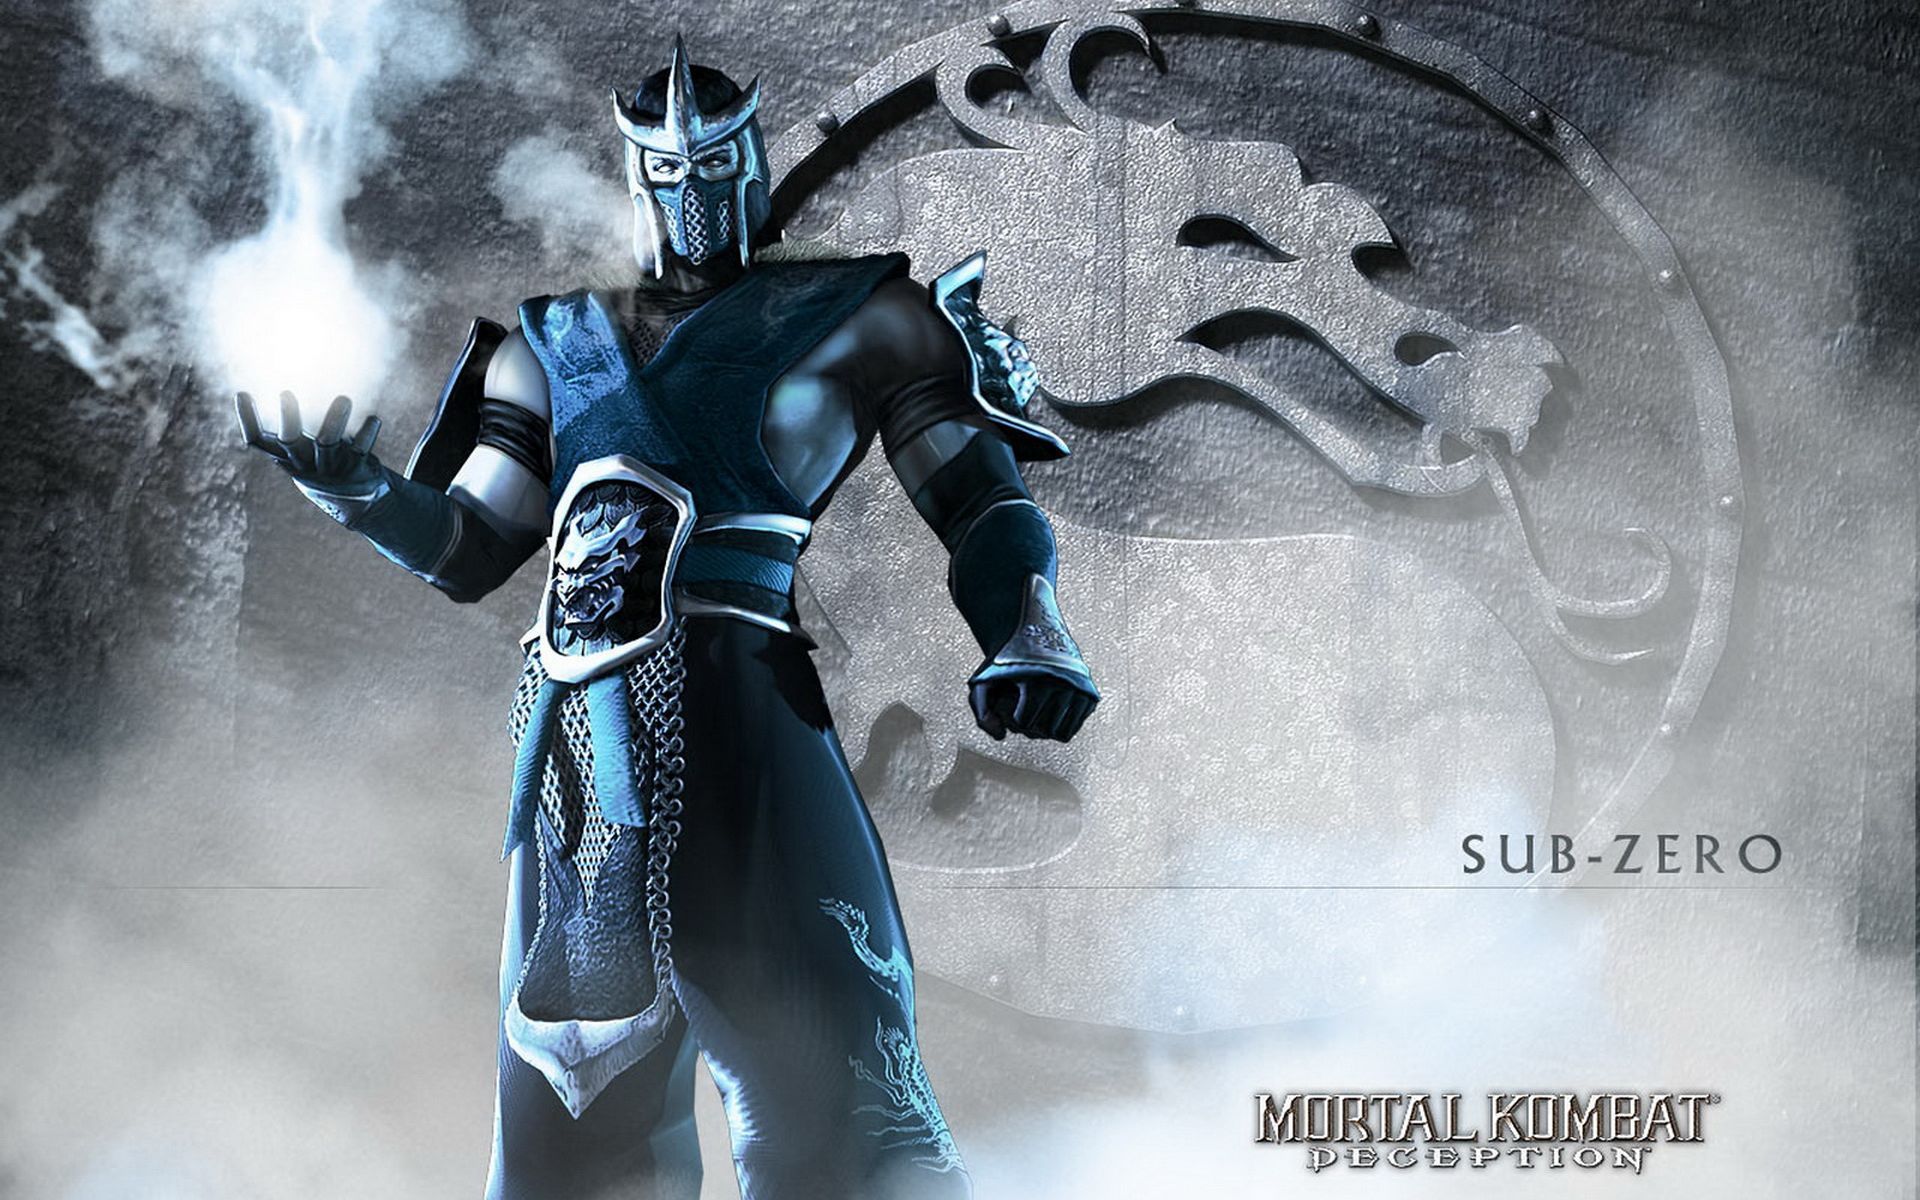 Mortal Kombat Characters Wallpaper